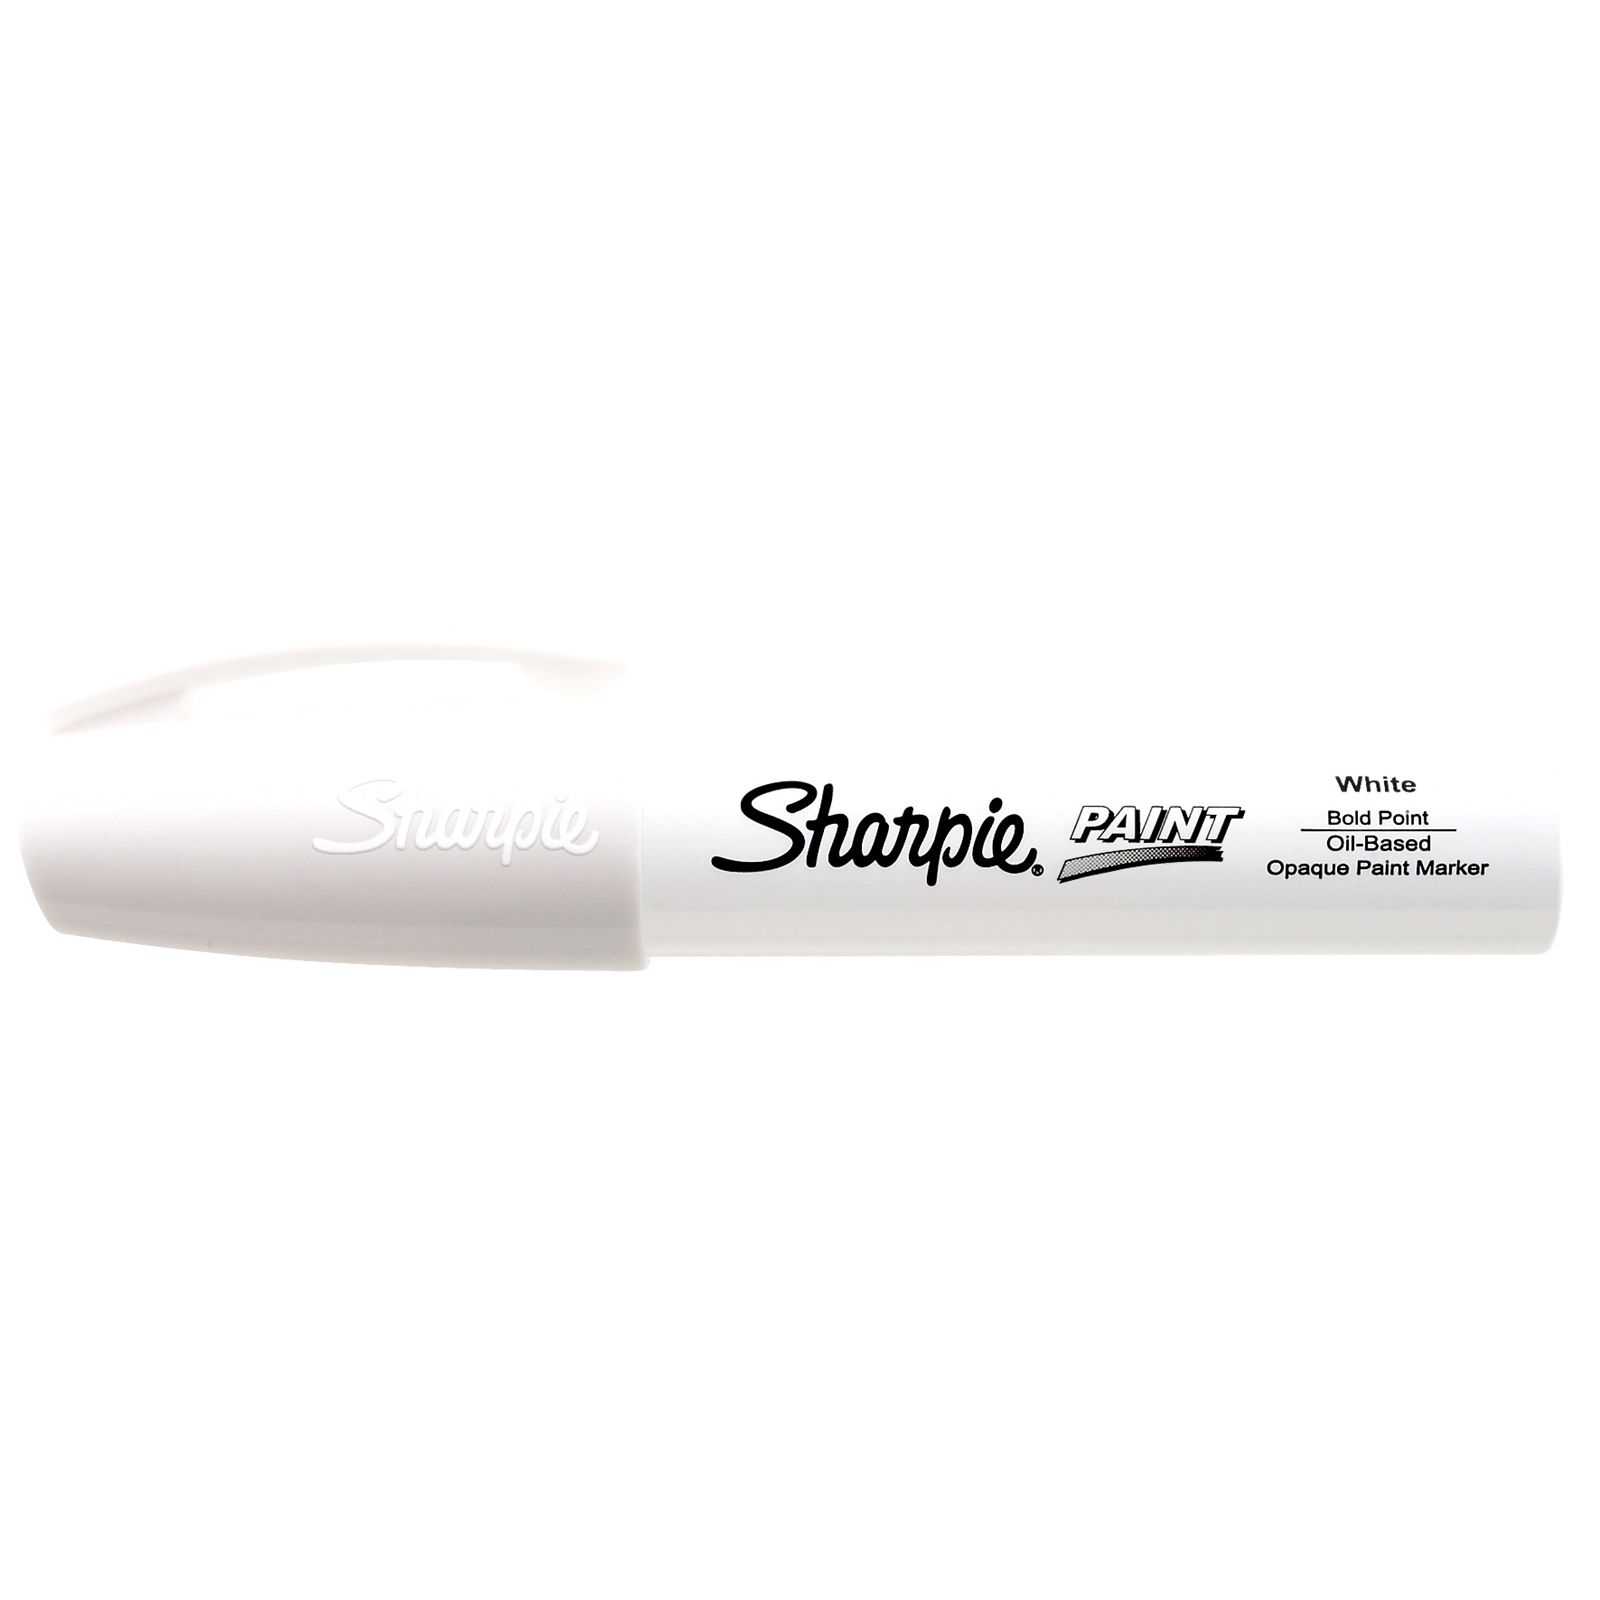 Sharpie White Bold Paint Marker